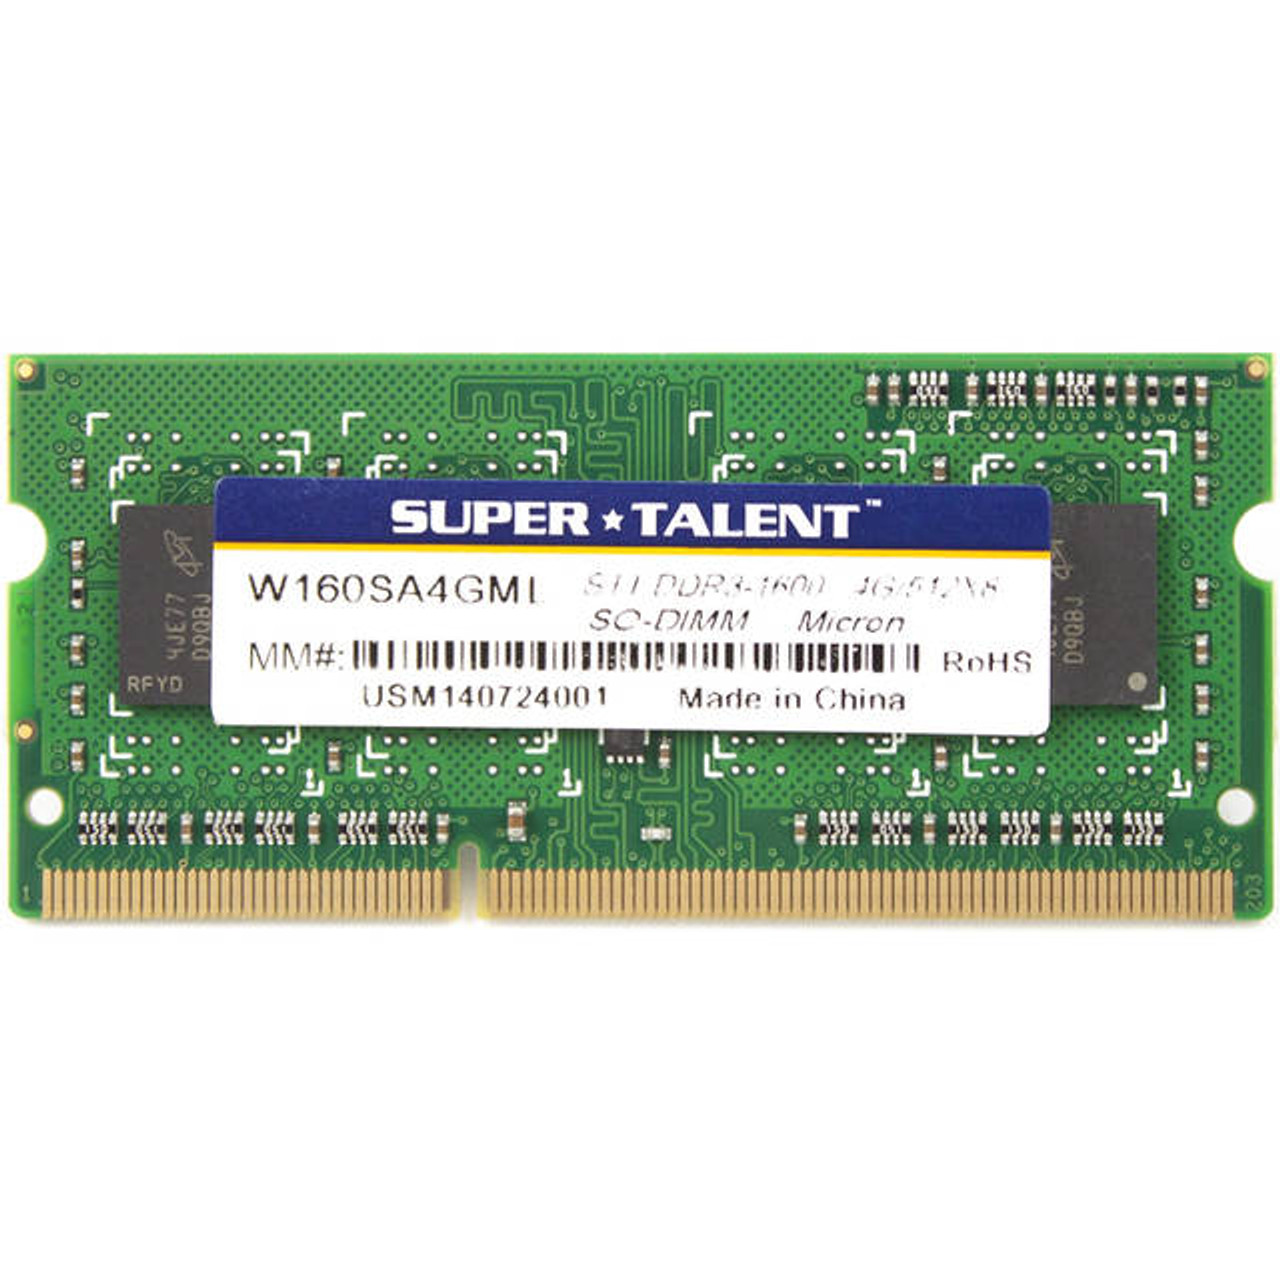 Super Talent DDR3L-1600 SODIMM 4GB/512Mx8 CL11 Micron Chip Notebook Memory